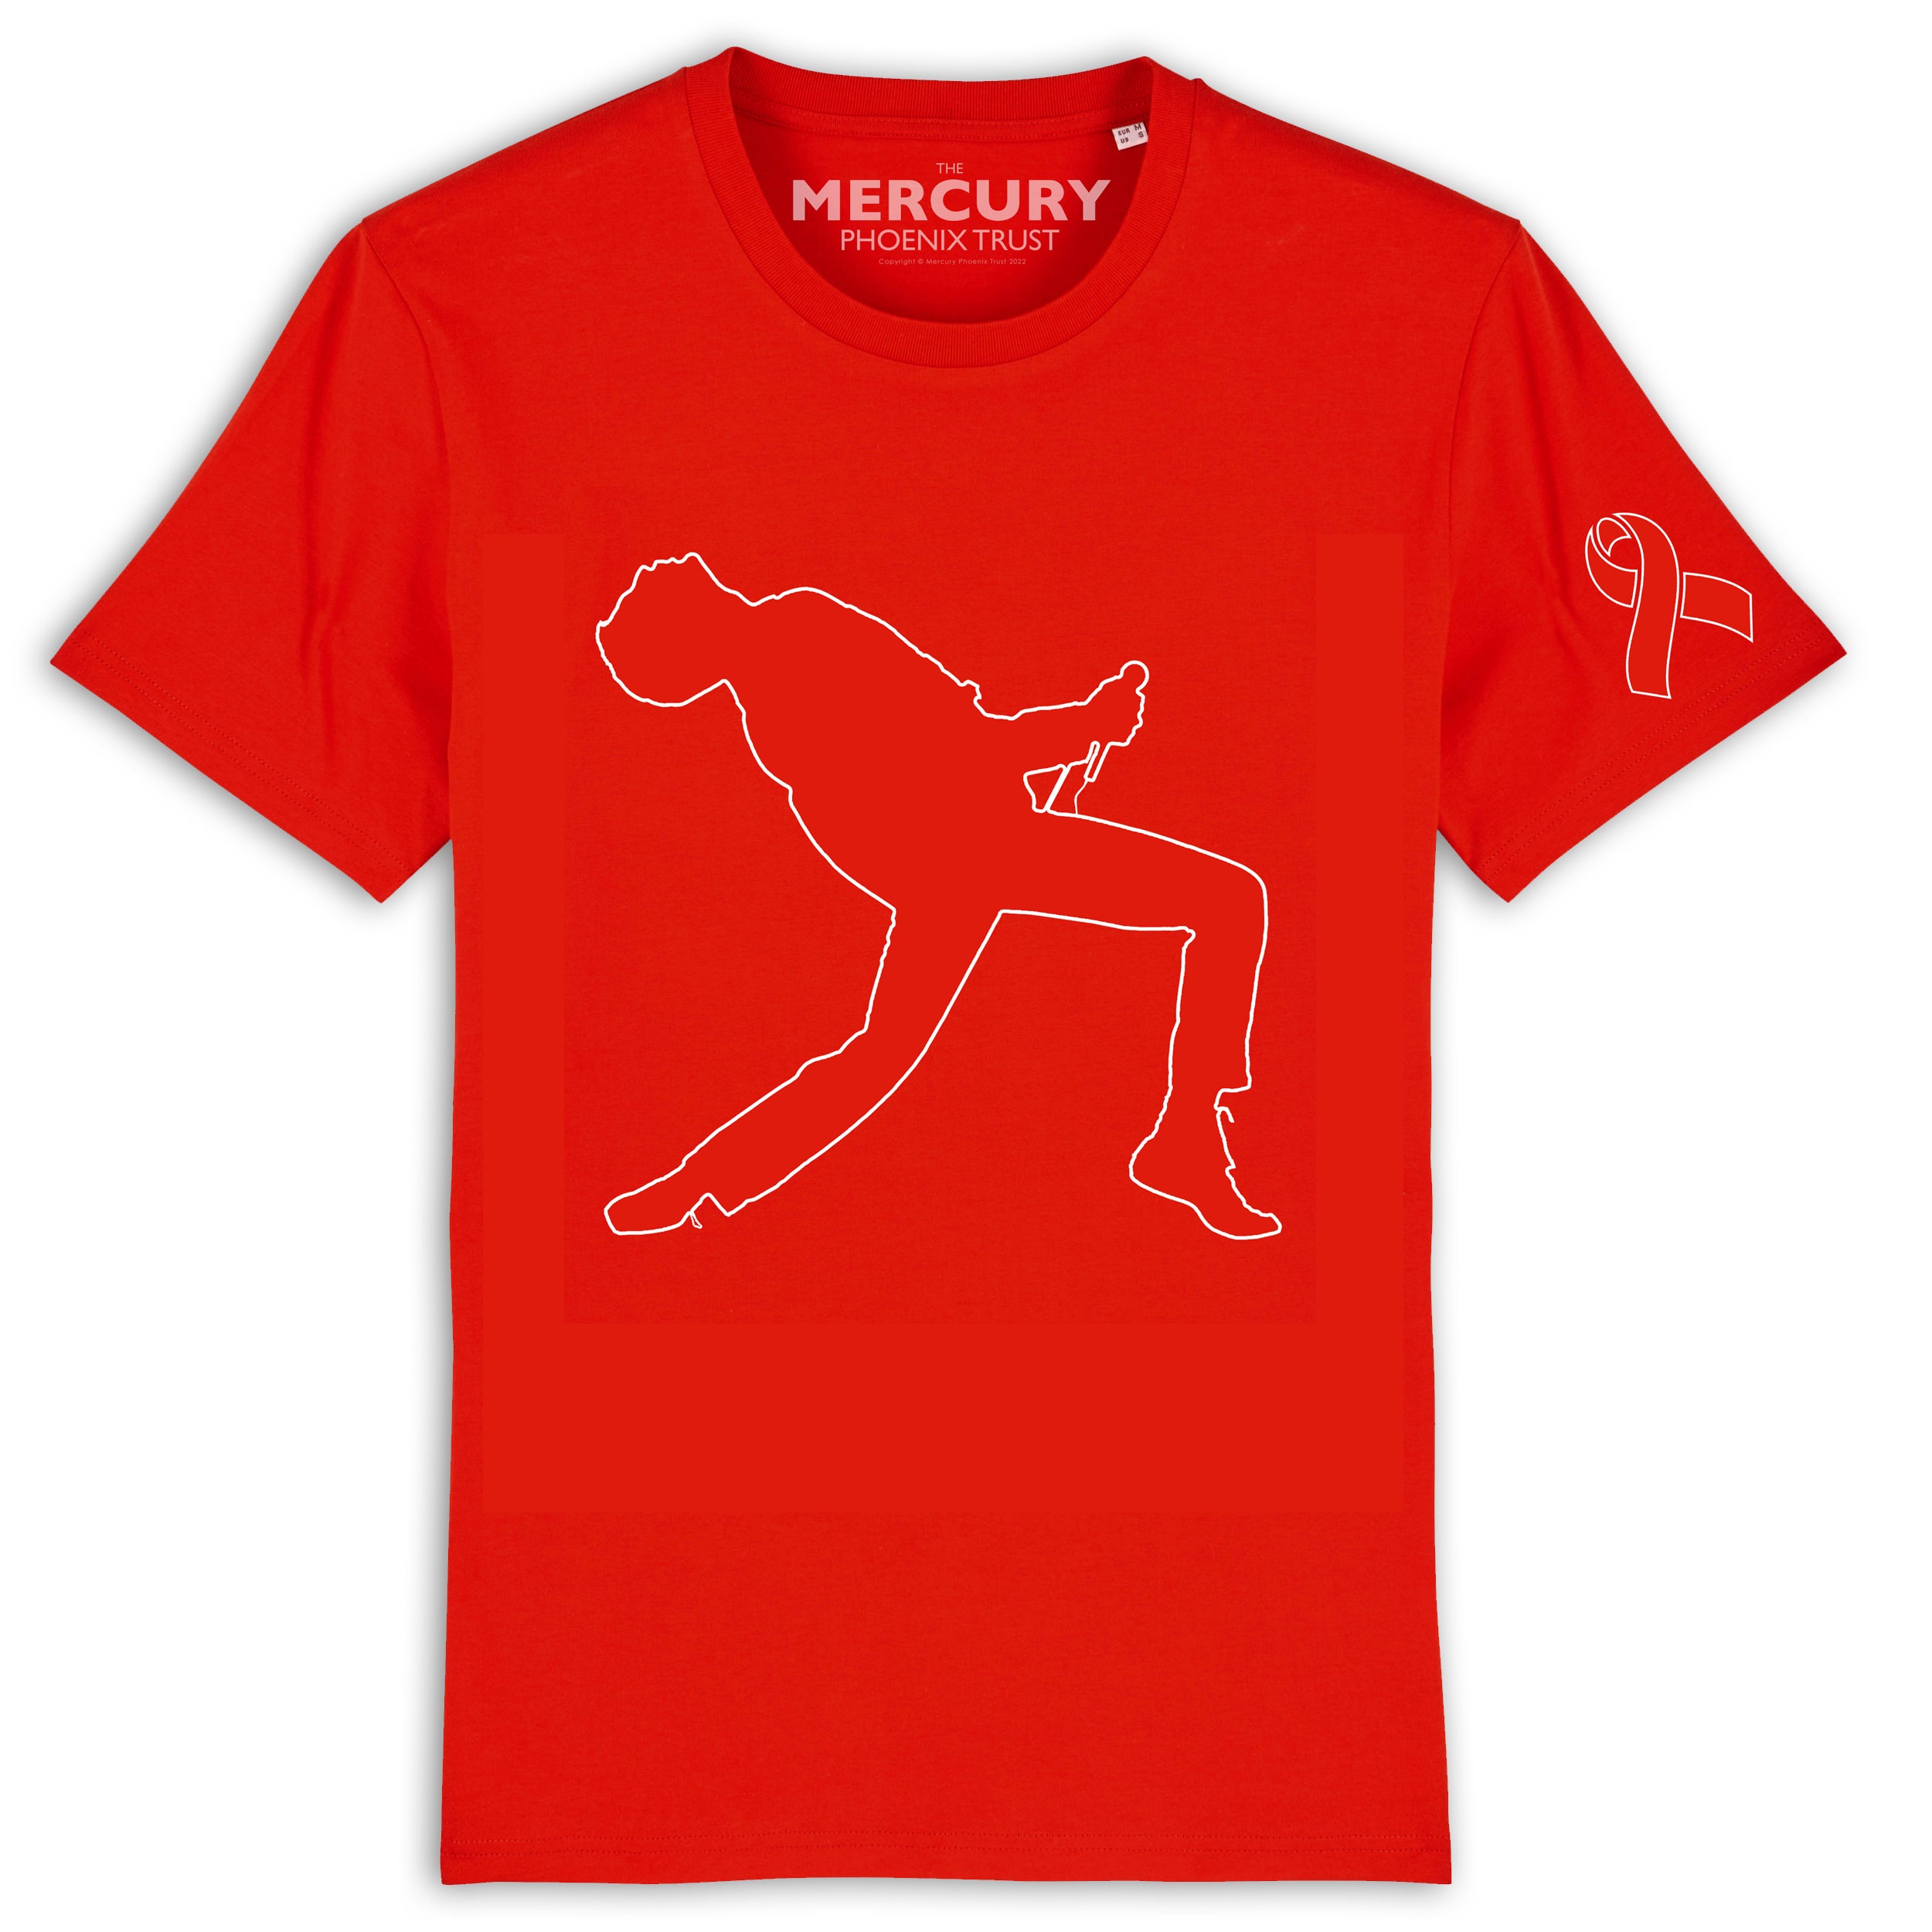 freddie for a day - Mercury Phoenix Trust World Aids Day T-Shirt